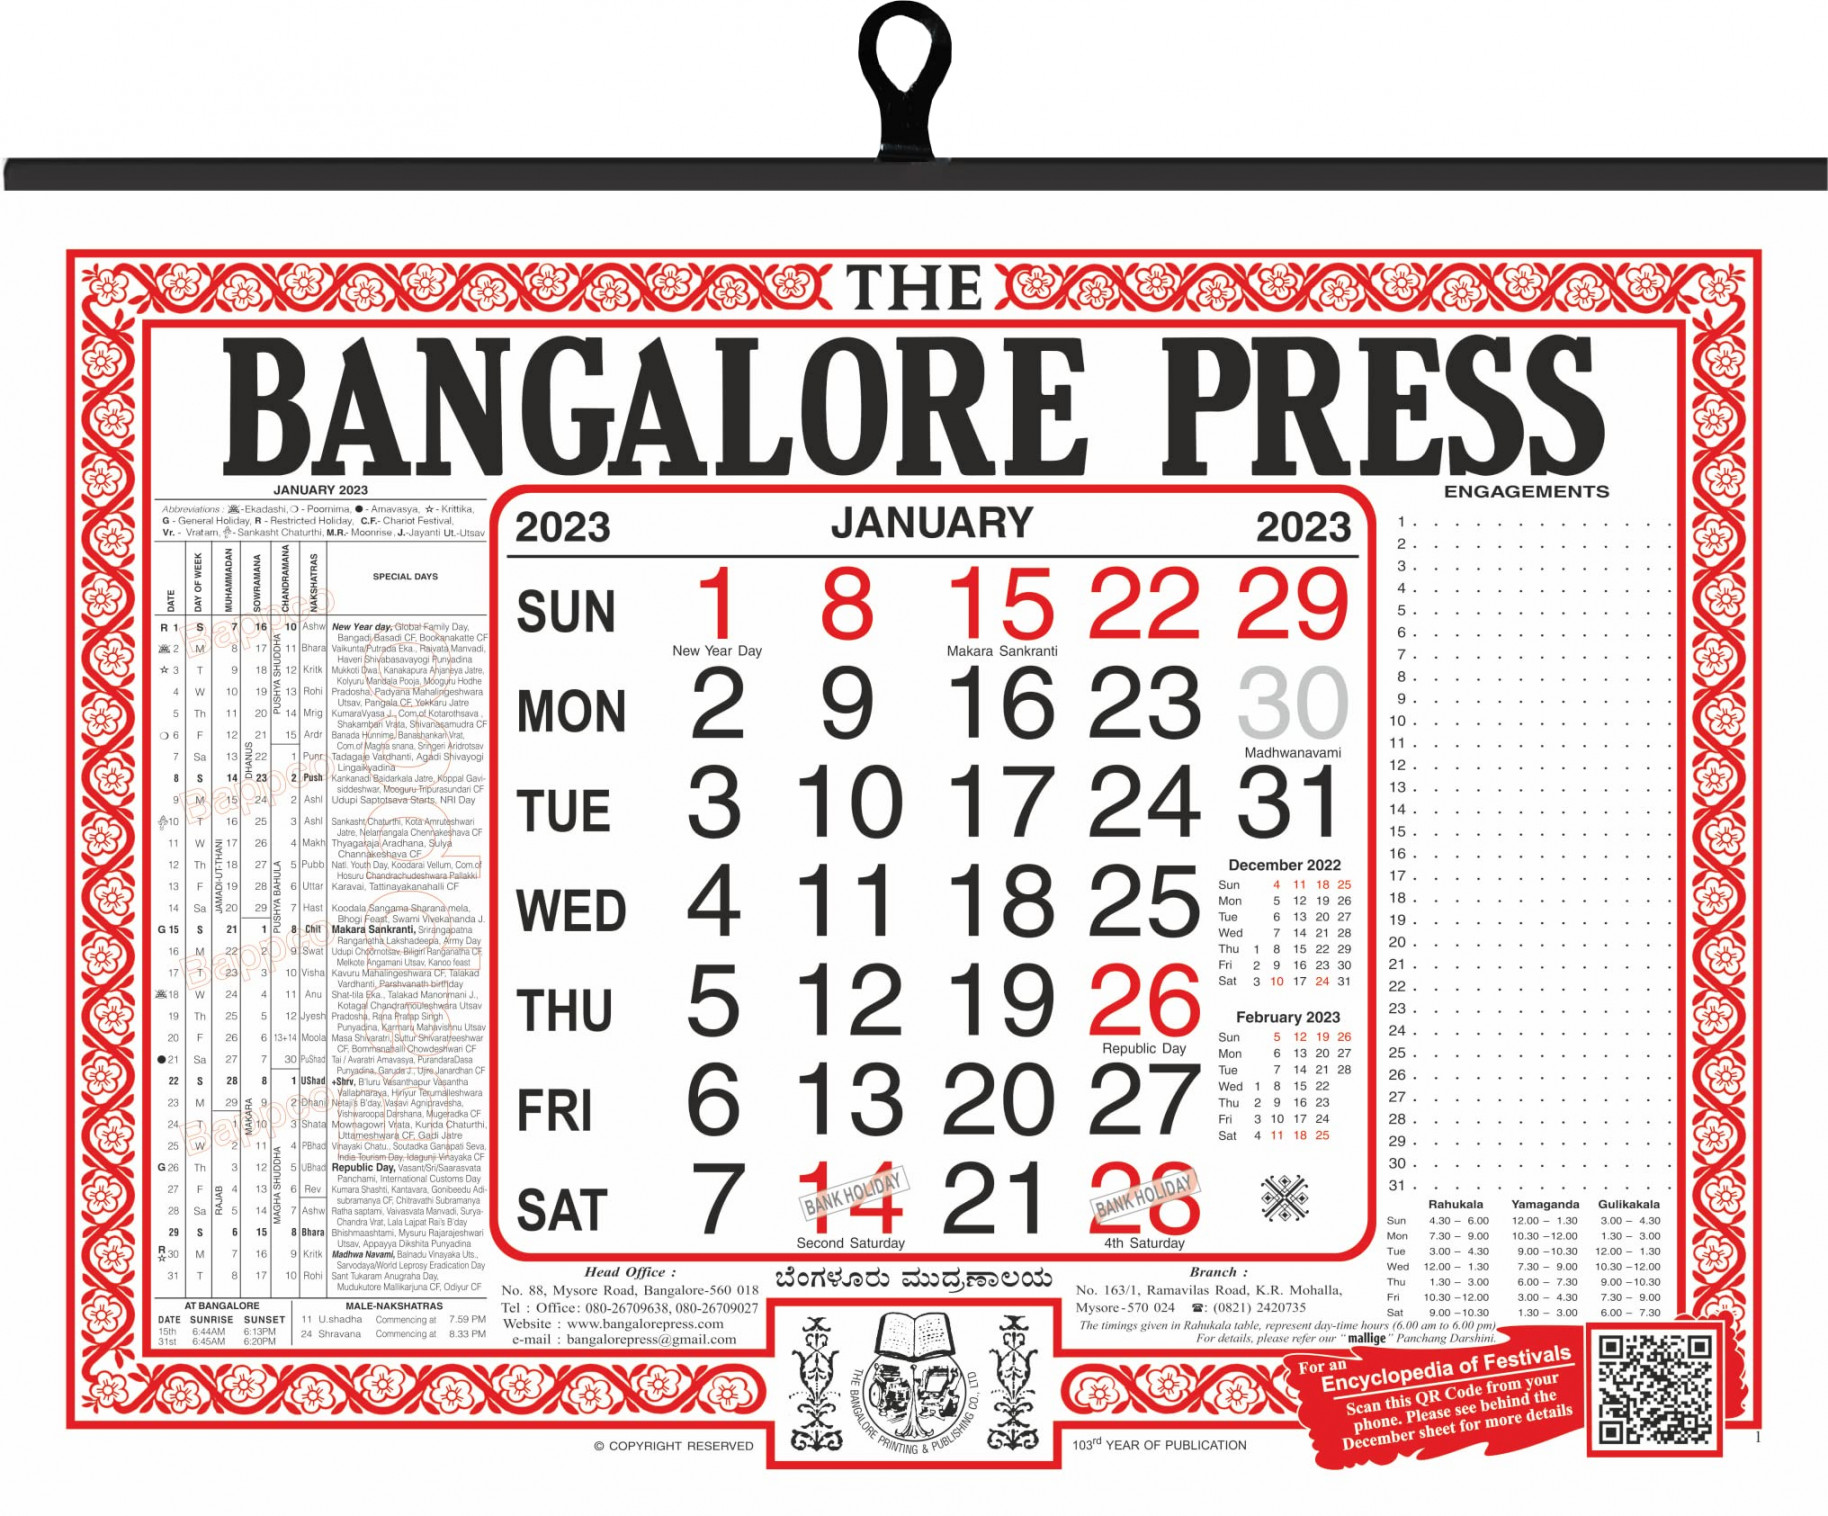 THE BANGALORE PRESS English Combination of Calendars - (Jumbo